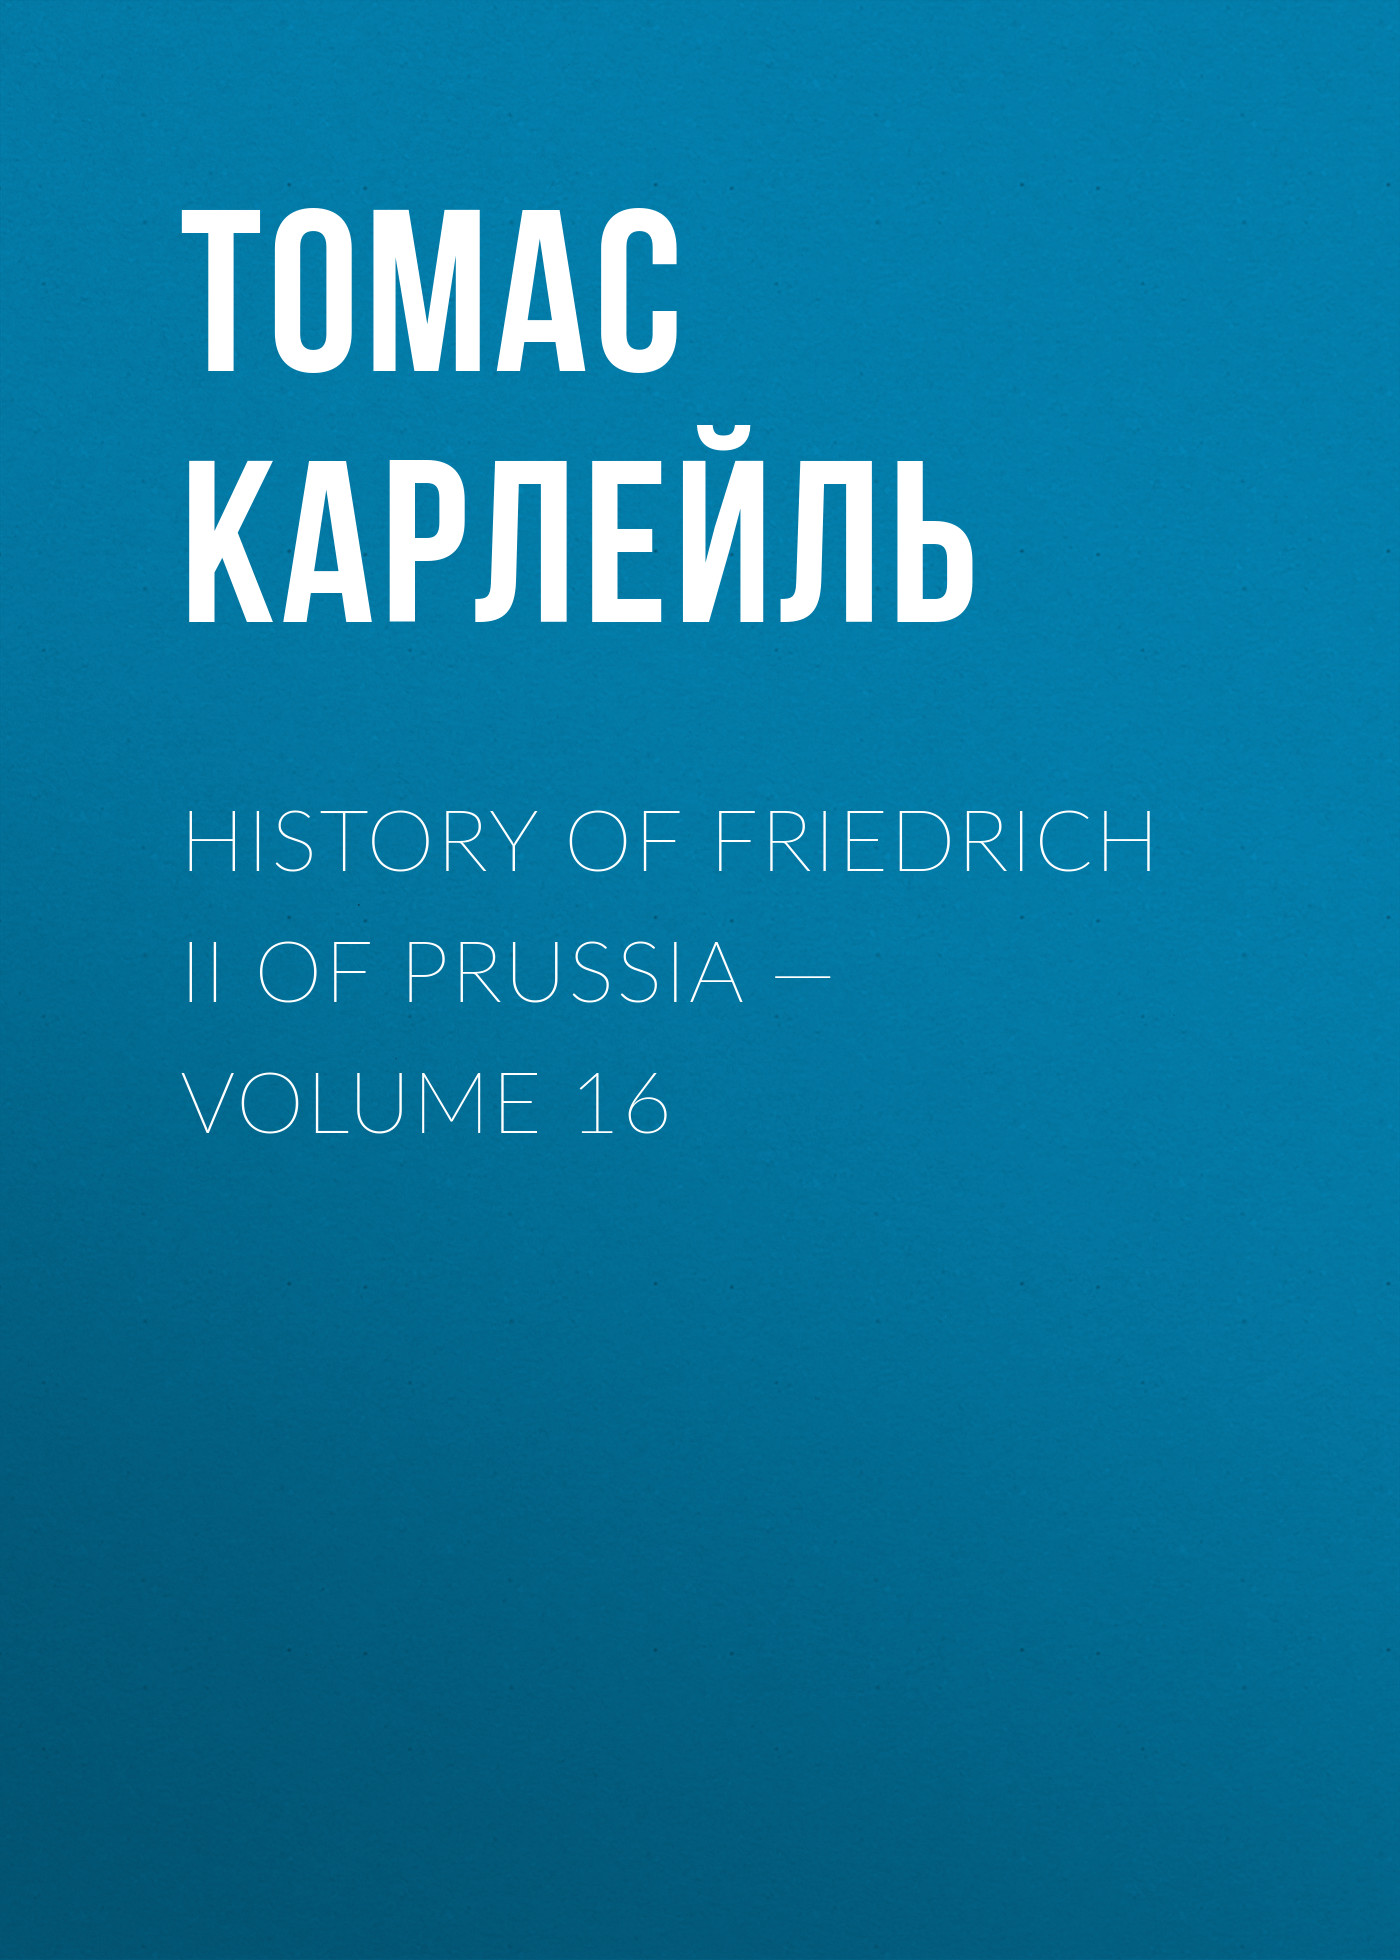 History of Friedrich II of Prussia— Volume 16